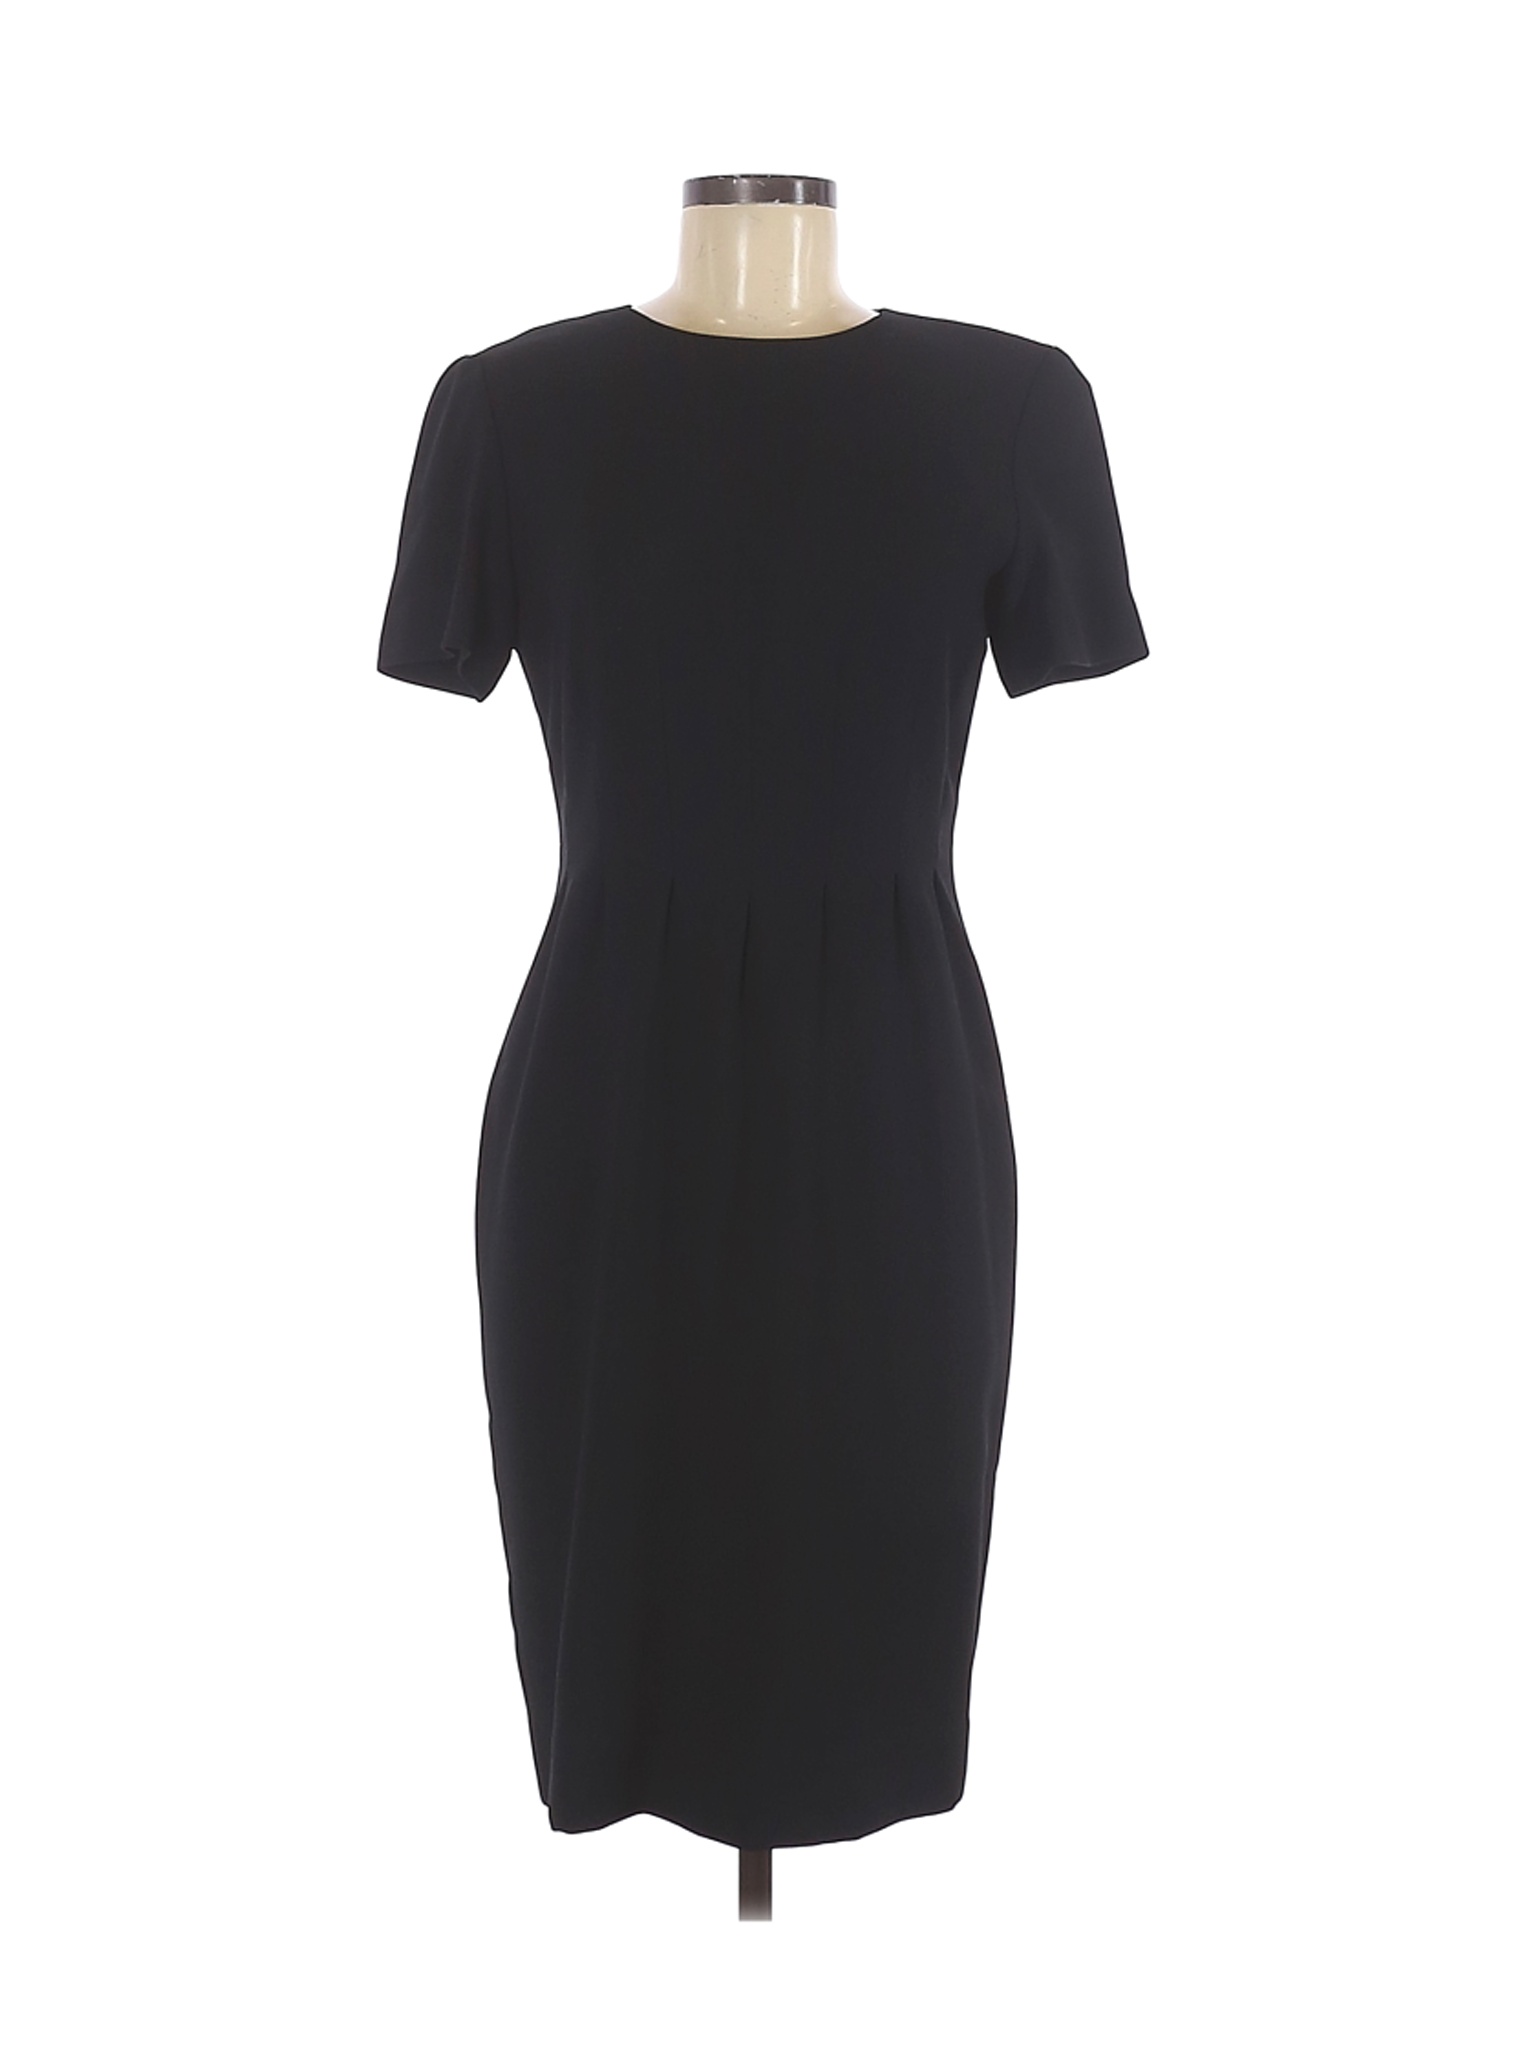 Liz Claiborne Women Black Casual Dress 6 | eBay